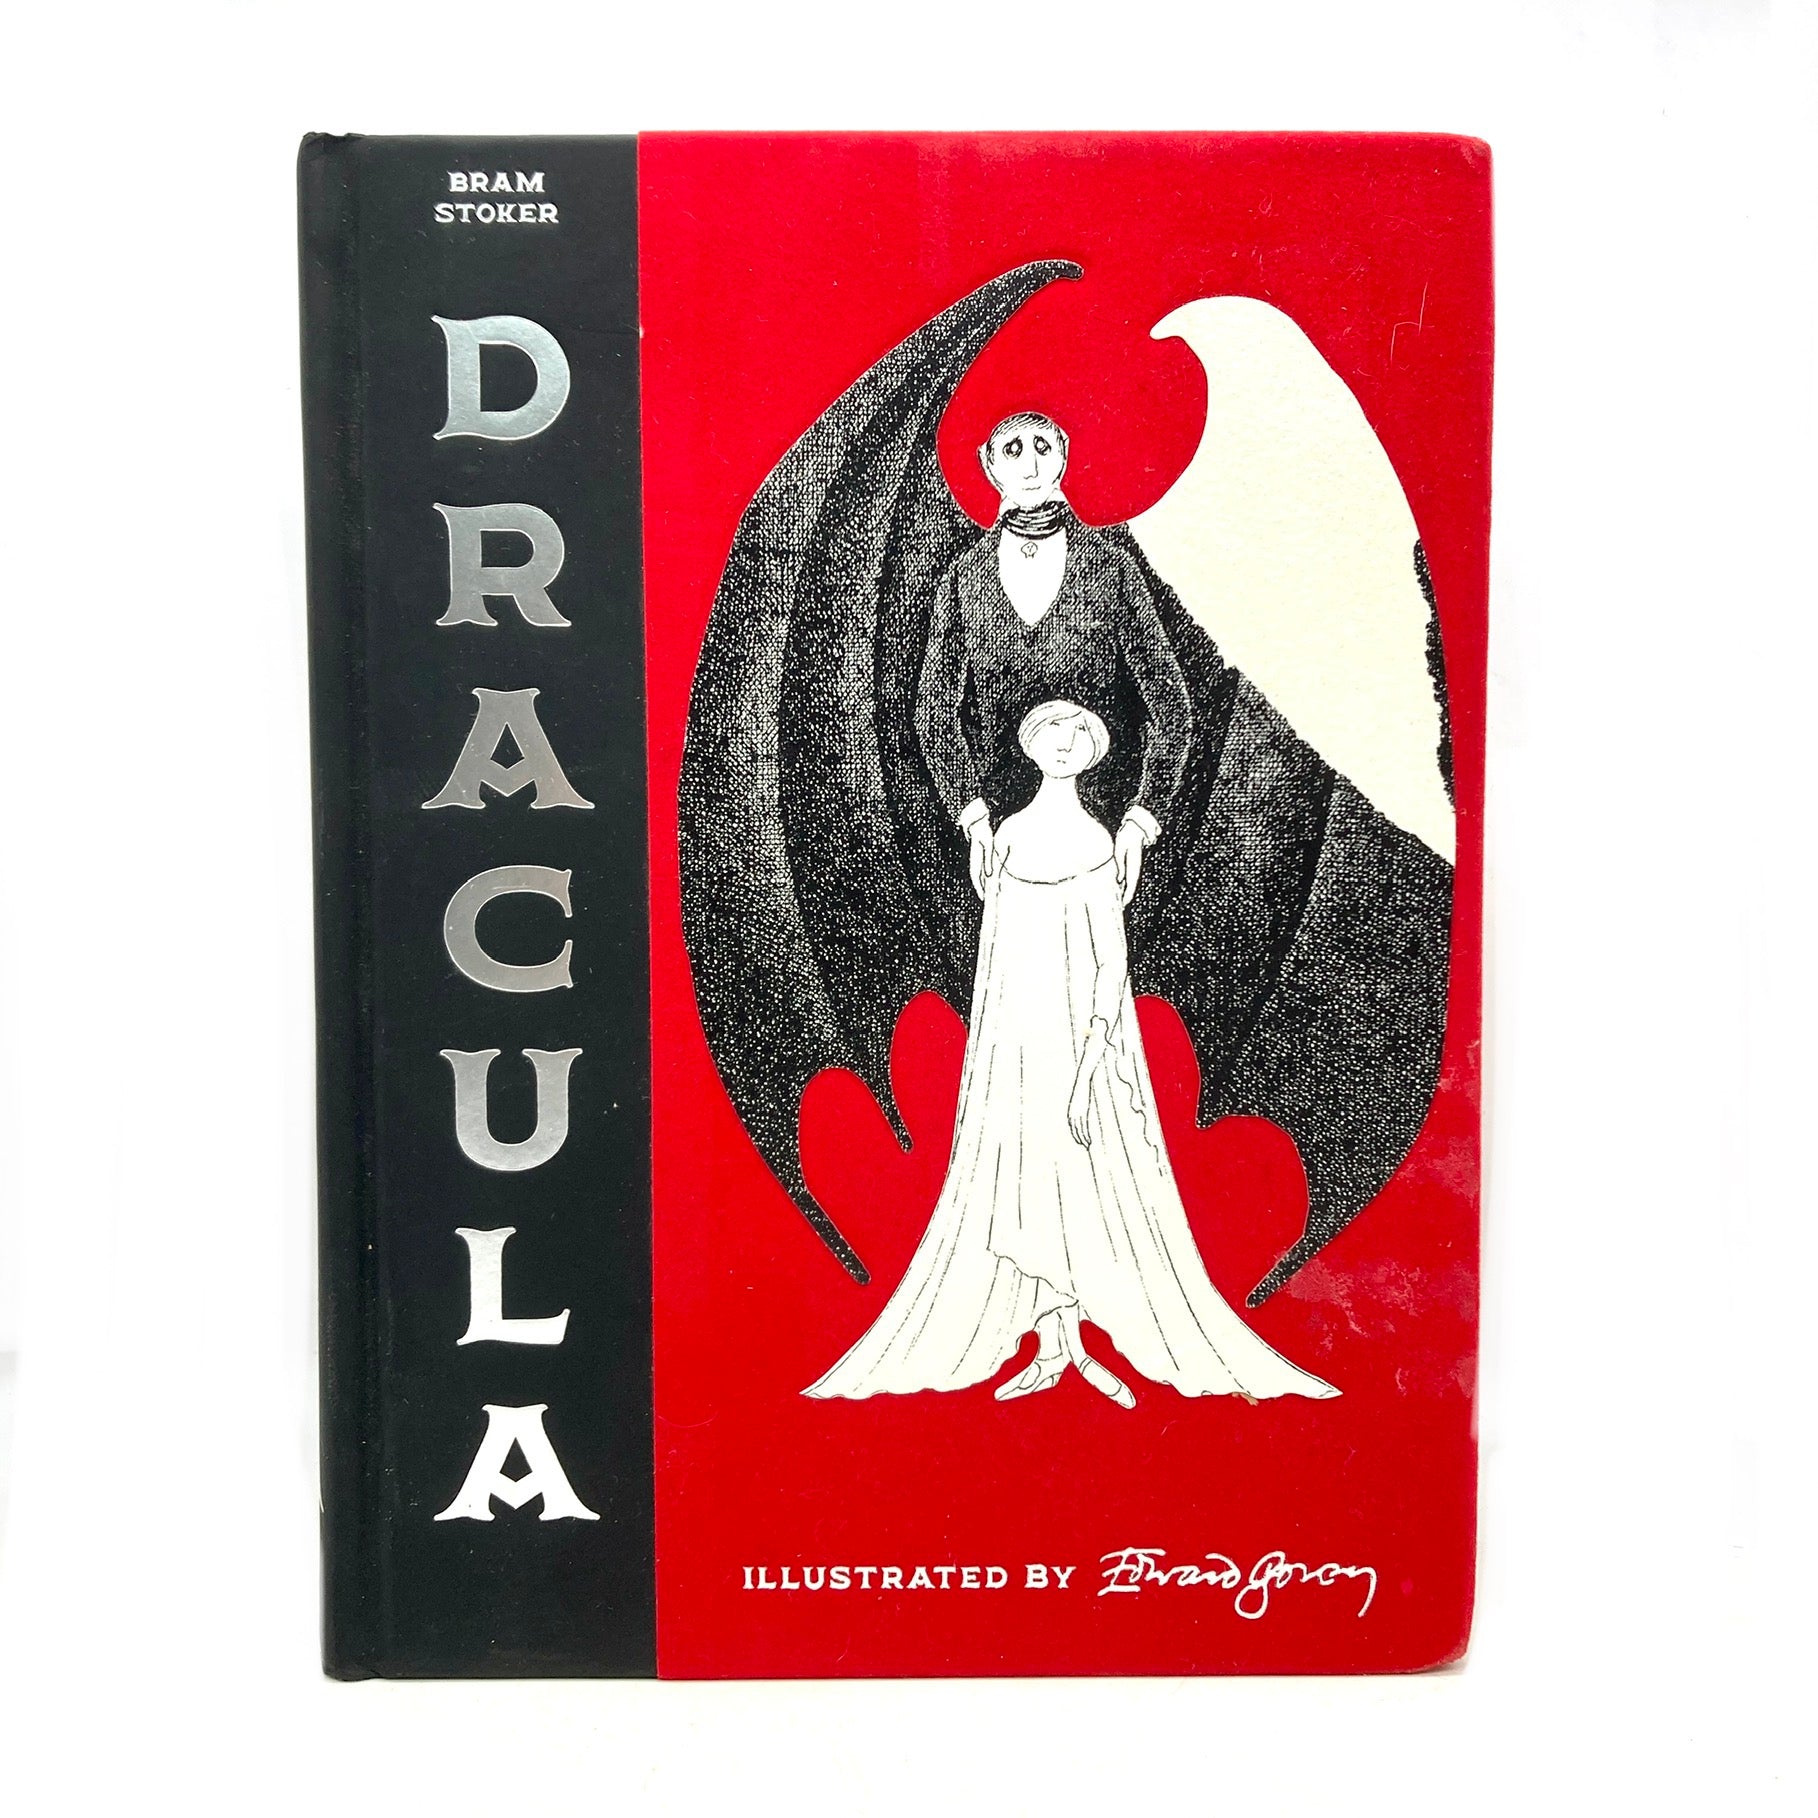 STOKER, Bram "Dracula" [Sterling, 1996] Illustrated by Edward Gorey - Buzz Bookstore